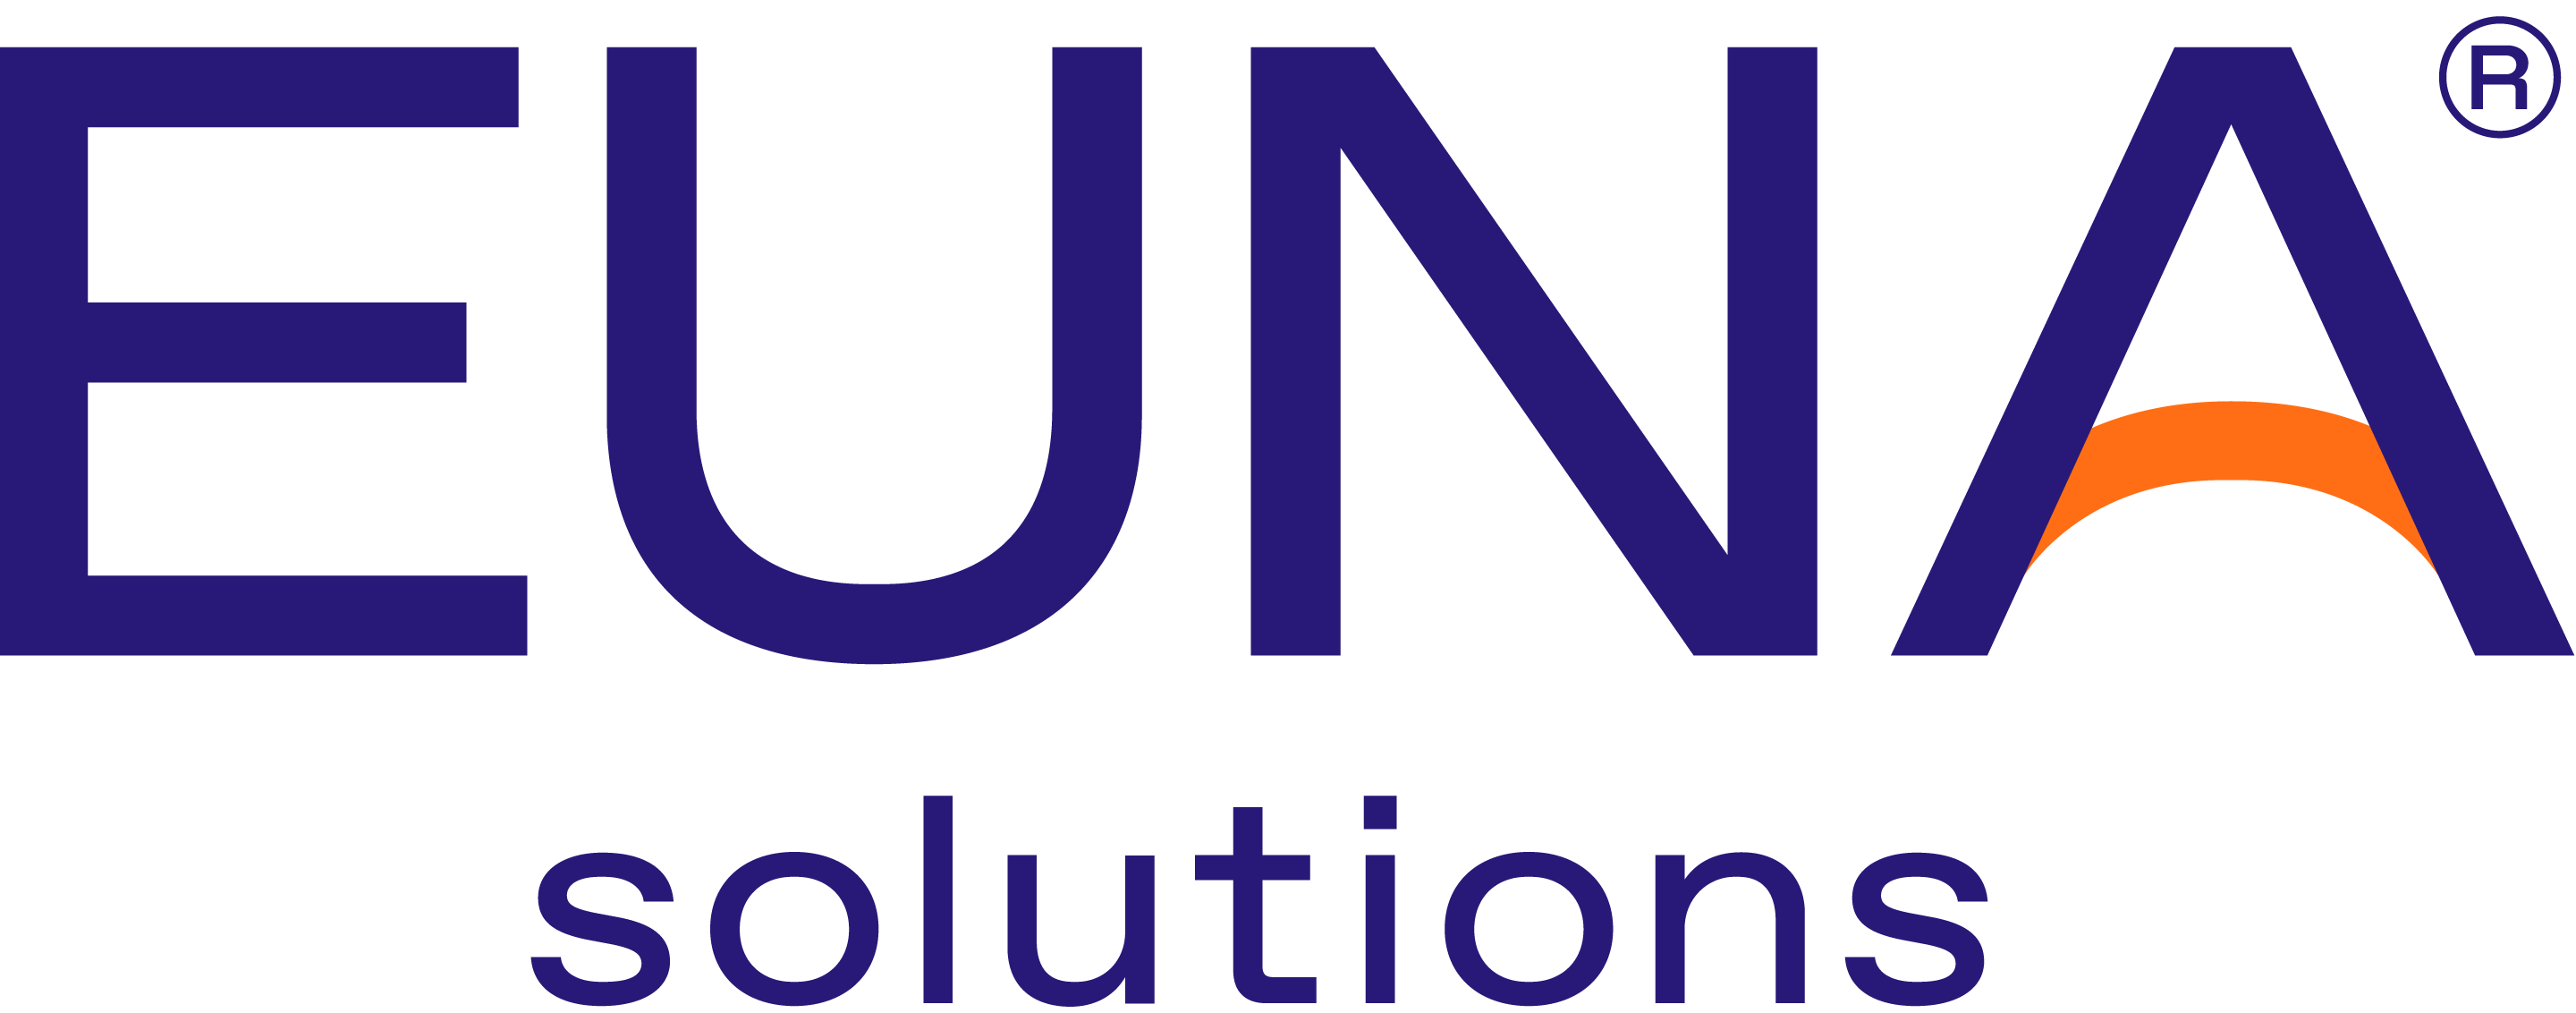 EUNA-RGB-PRIMARY-logo.png